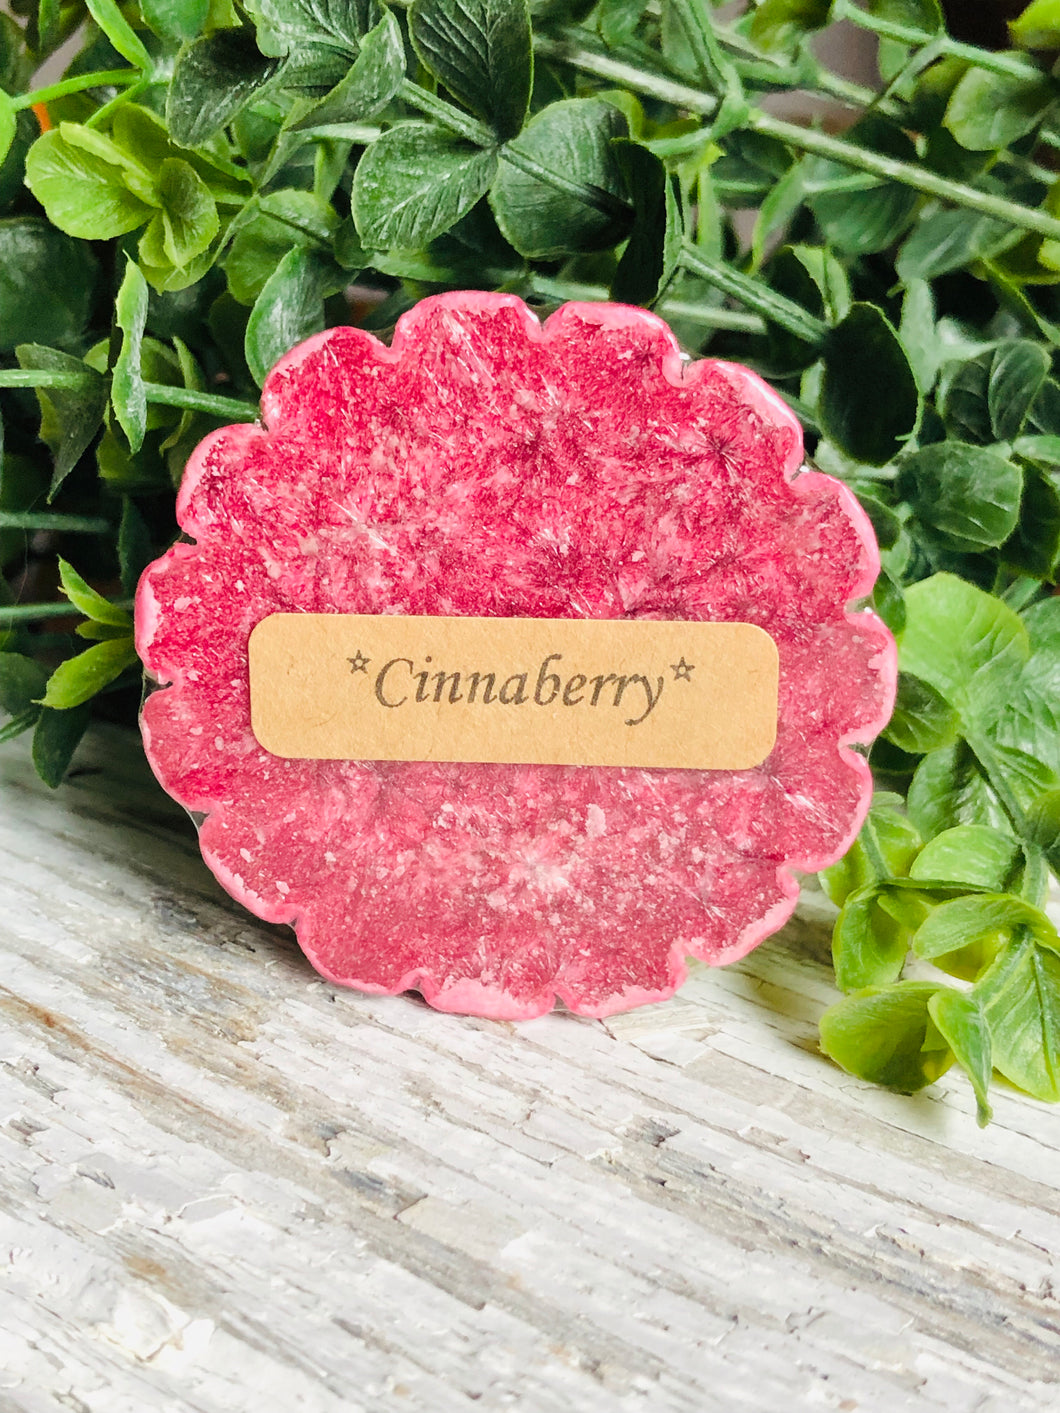 Cinnaberry Tart